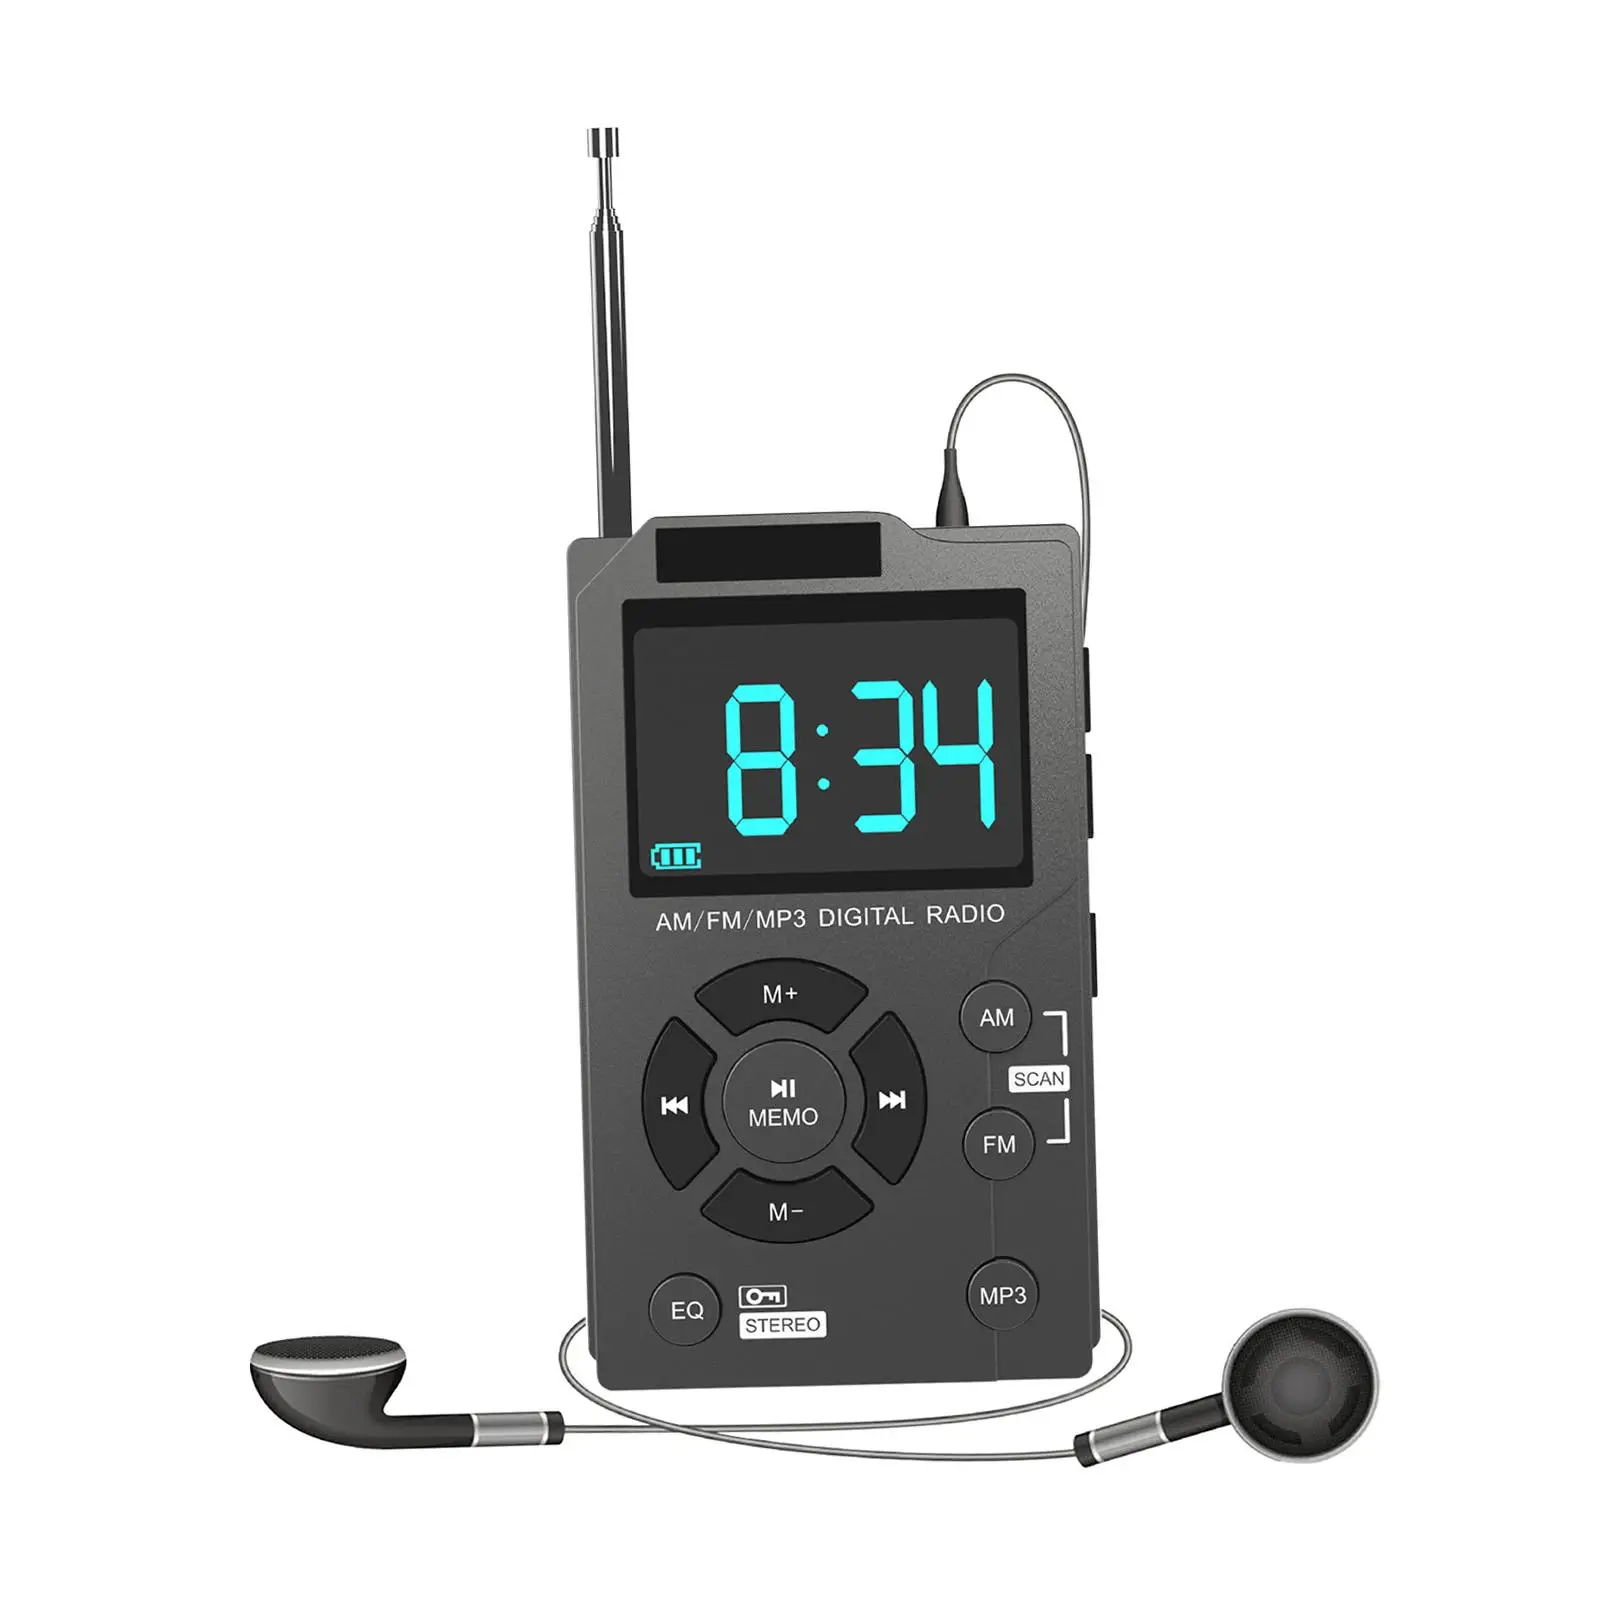 AM FM Radio 600mAh Rechargeable High Performance Premium Durable Portable Radio AM/FM/MP3 Digital Radio for Office Travel Senior